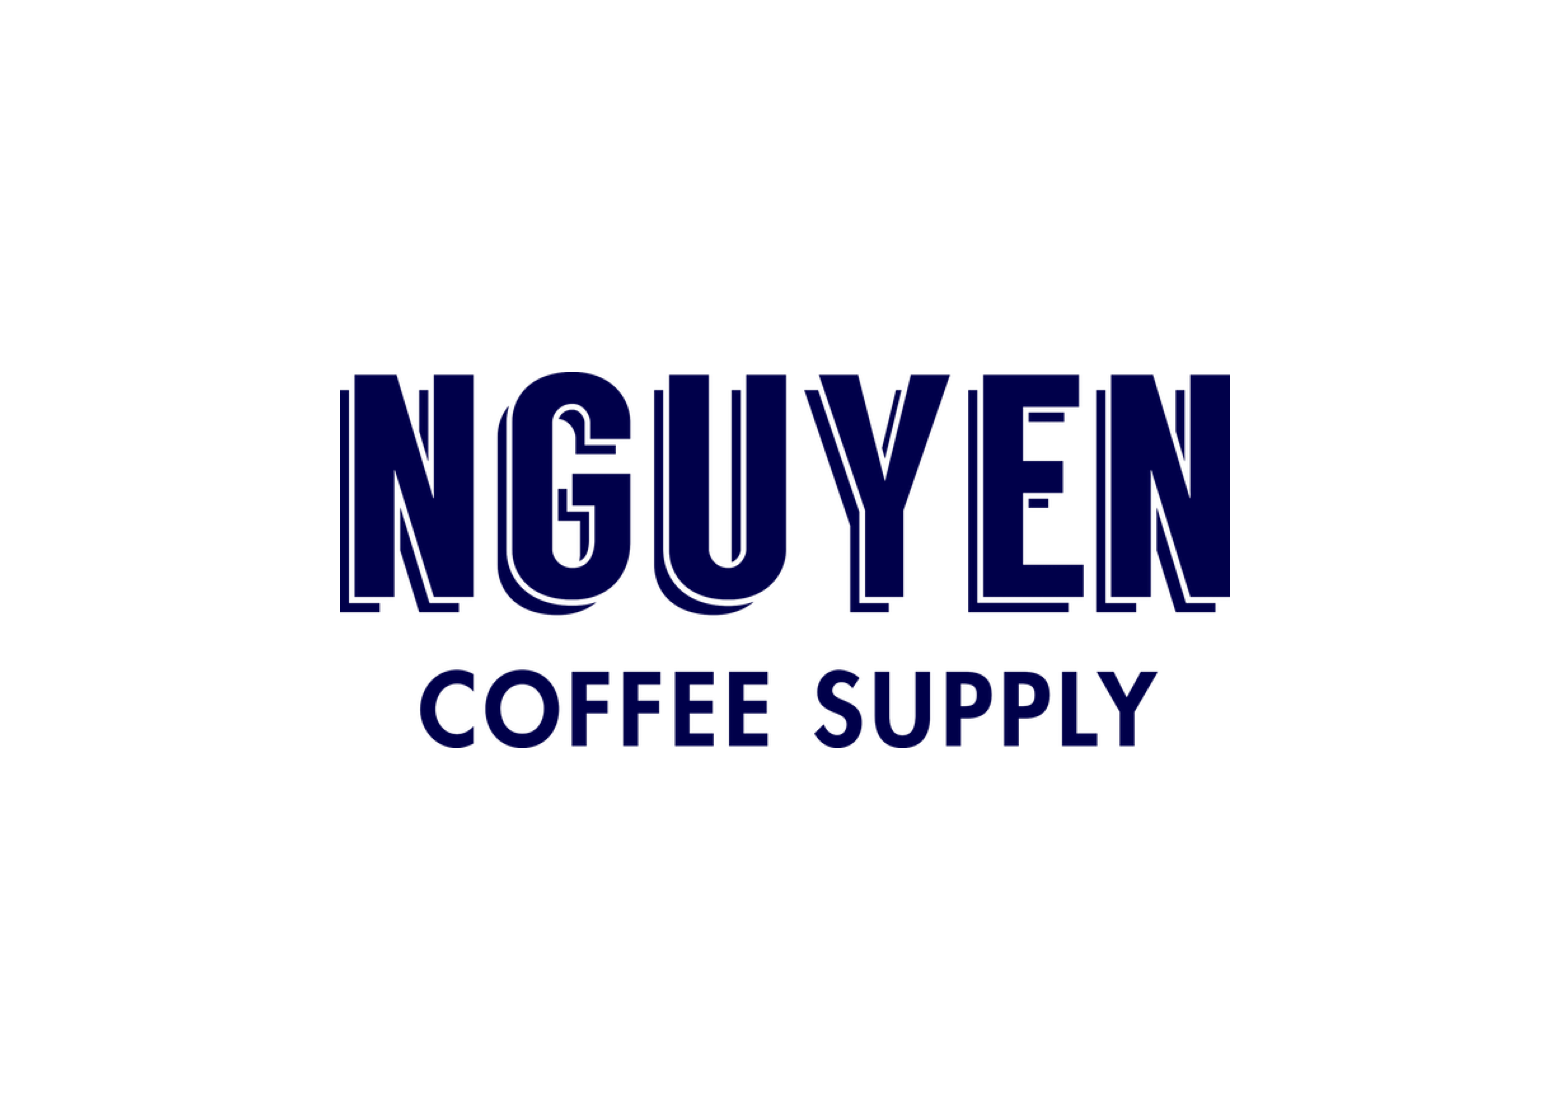 Nguyen Coffee Supply - Organic Vietnamese Coffee